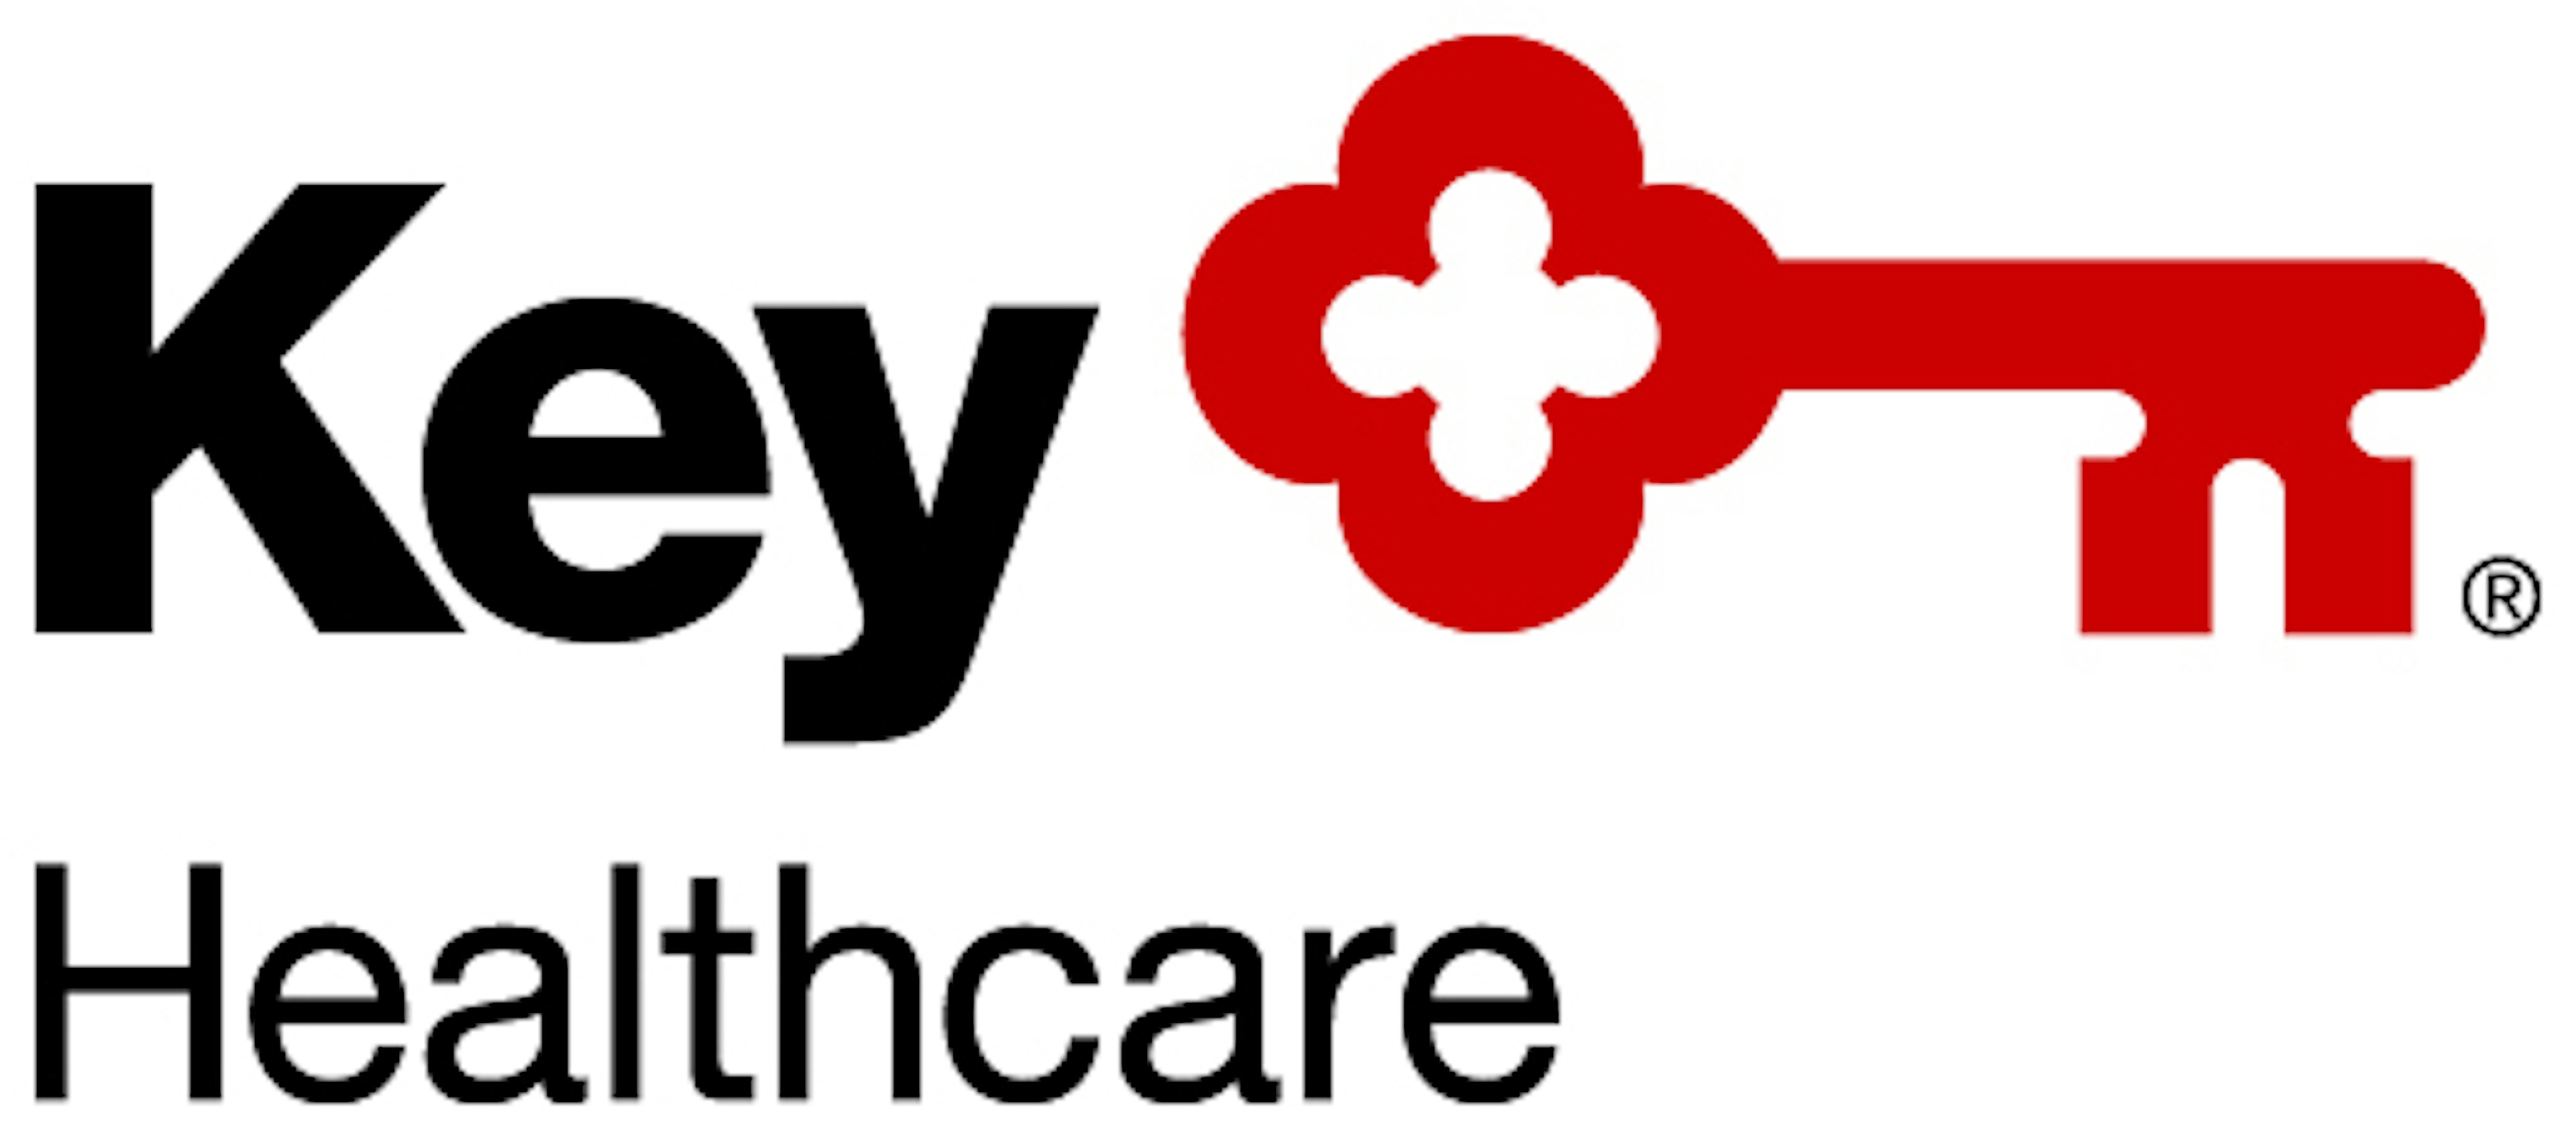 Key Logo Healthcare Rgb